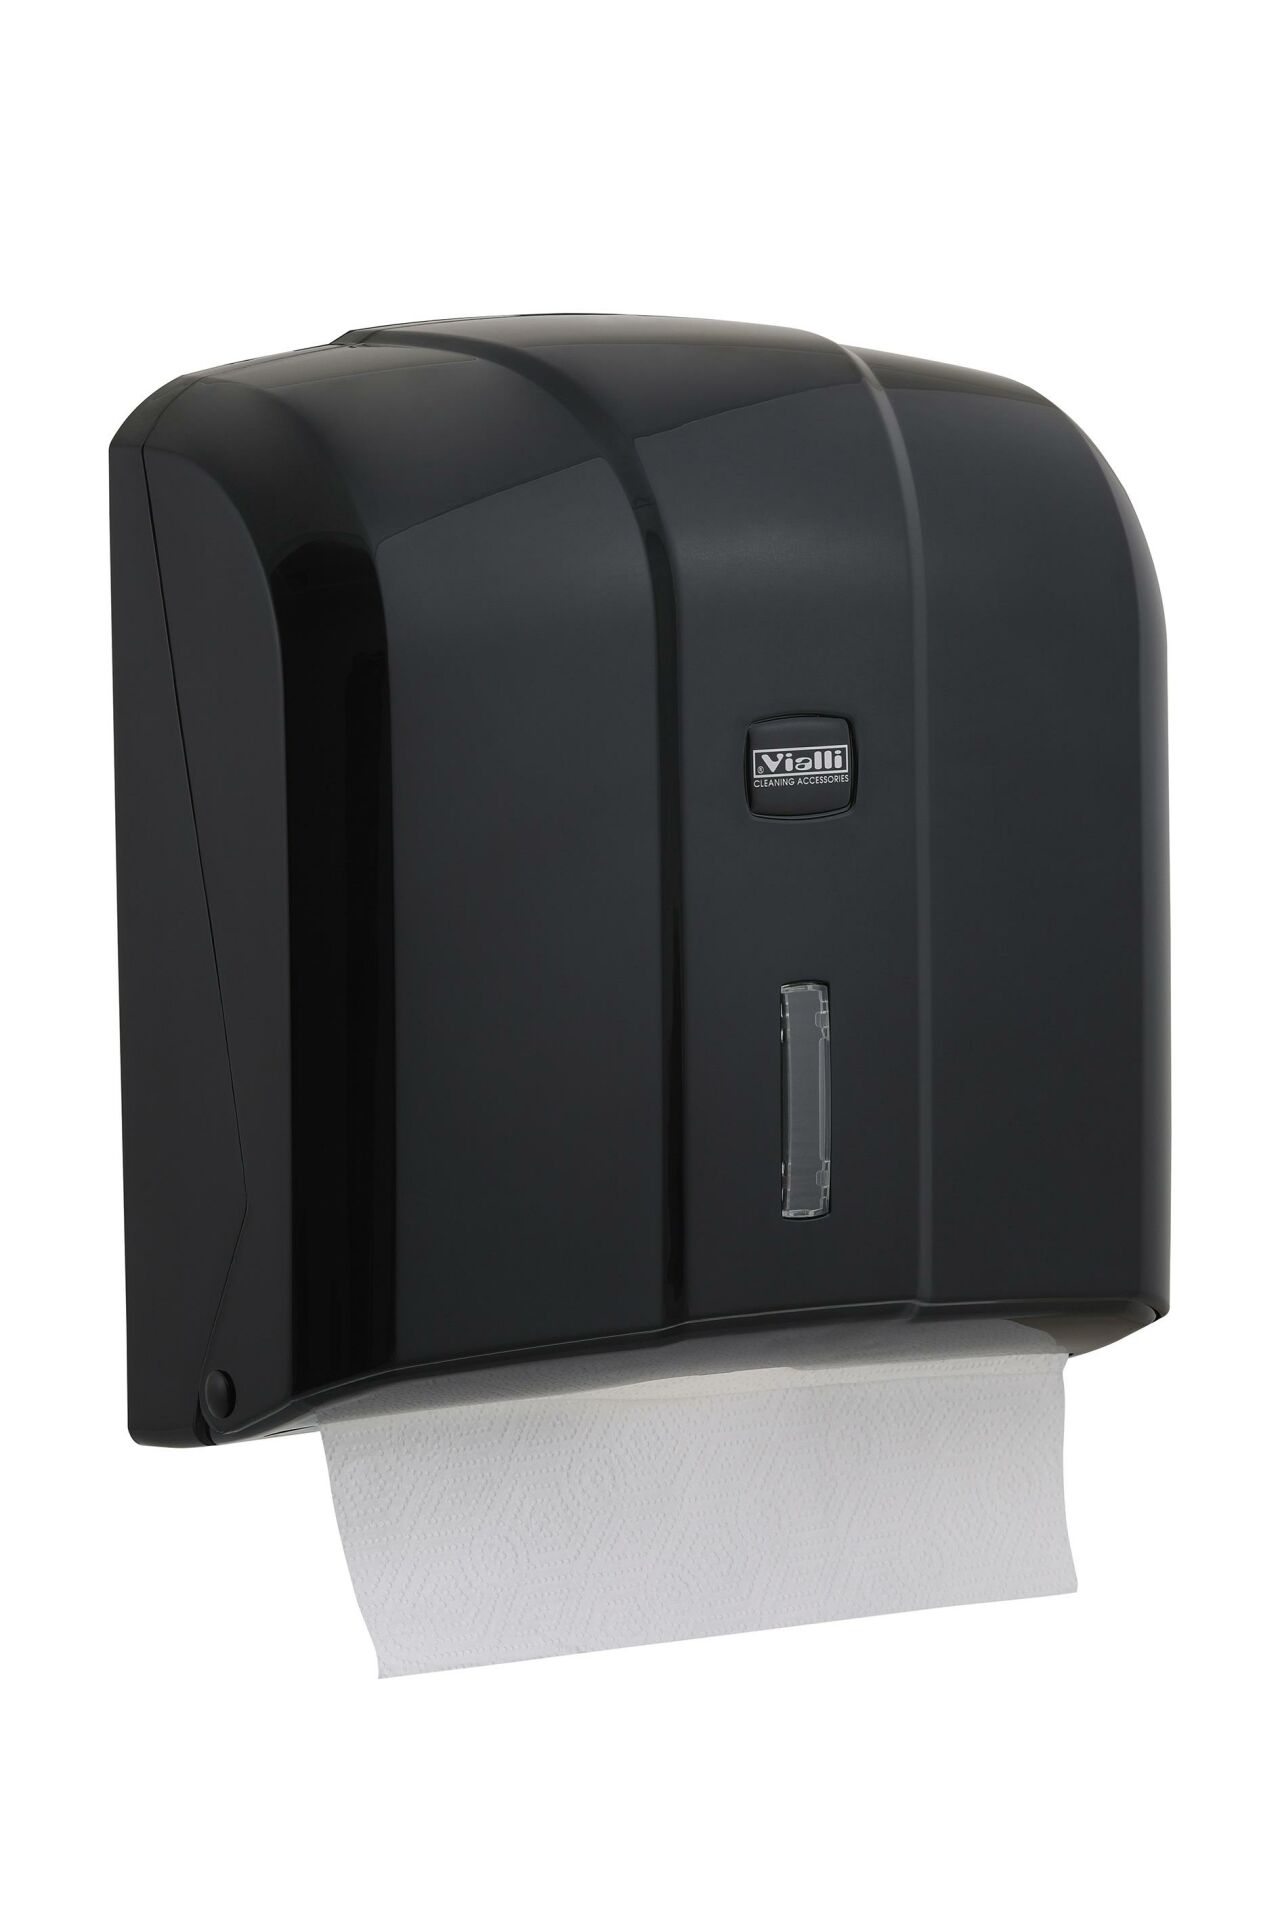 Vialli KH300B Z Katlı Kağıt Havlu Dispenseri 300'lü Siyah